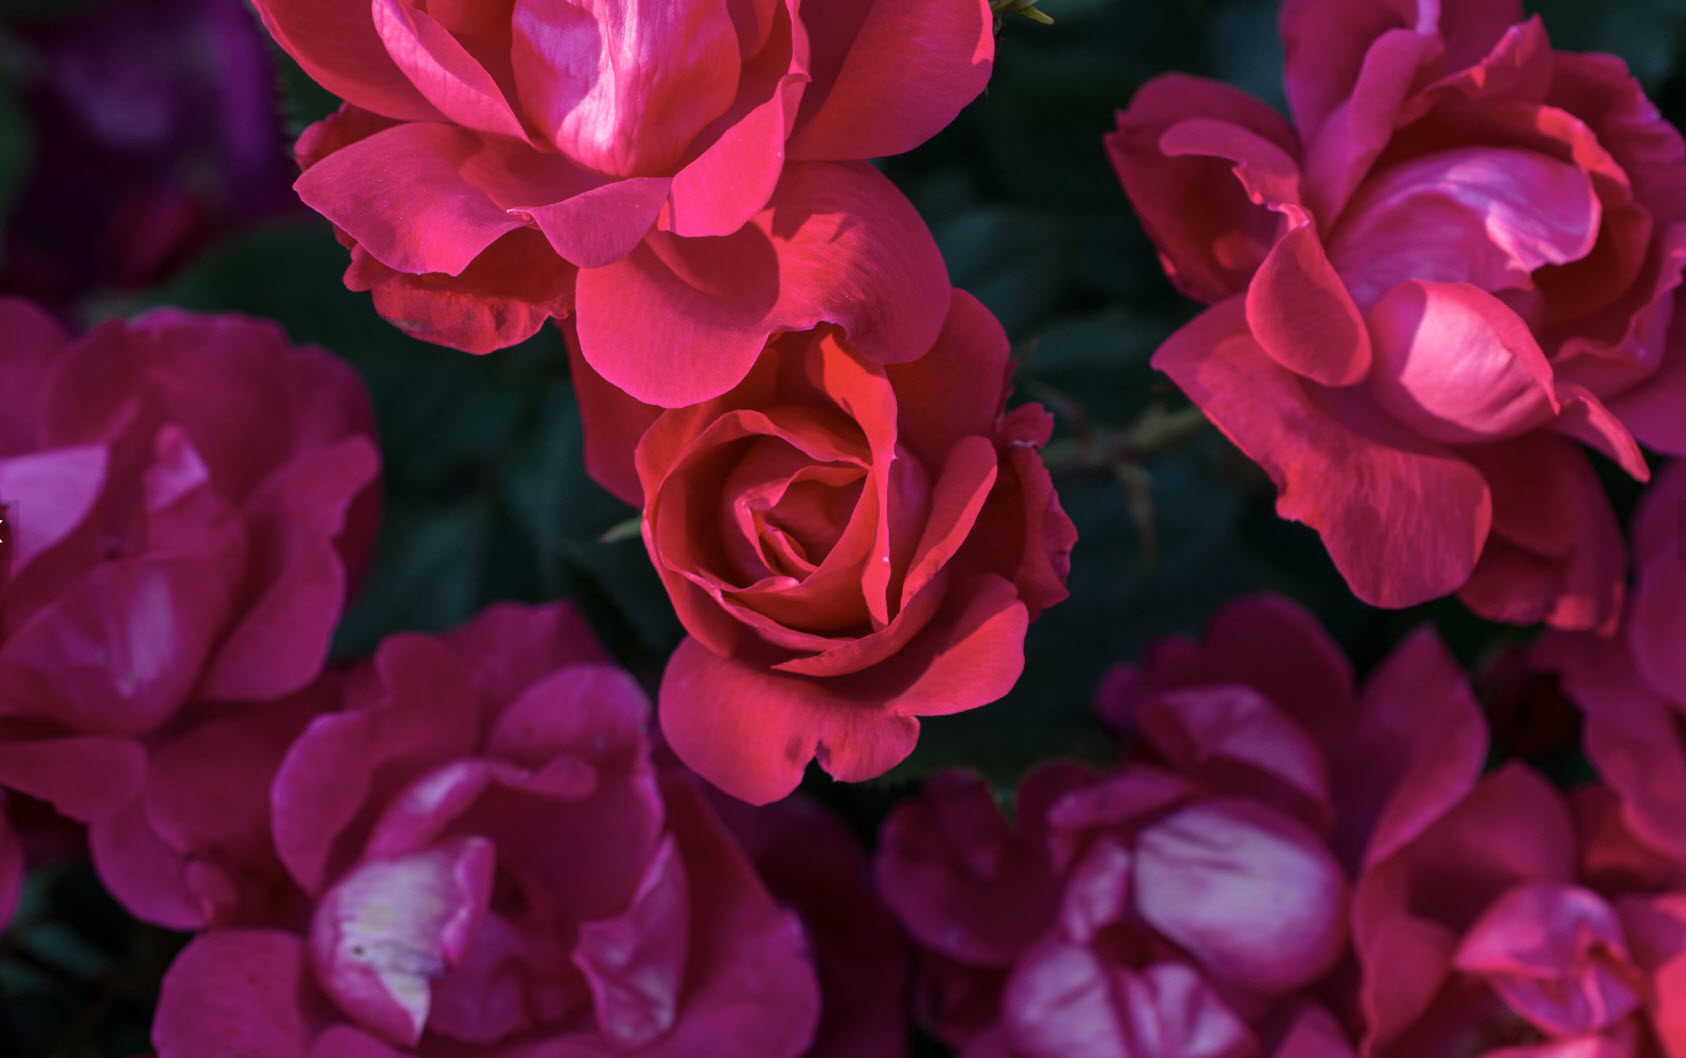 Shrub Rose 'Radrazz' KNOCK OUT, Plant Profile